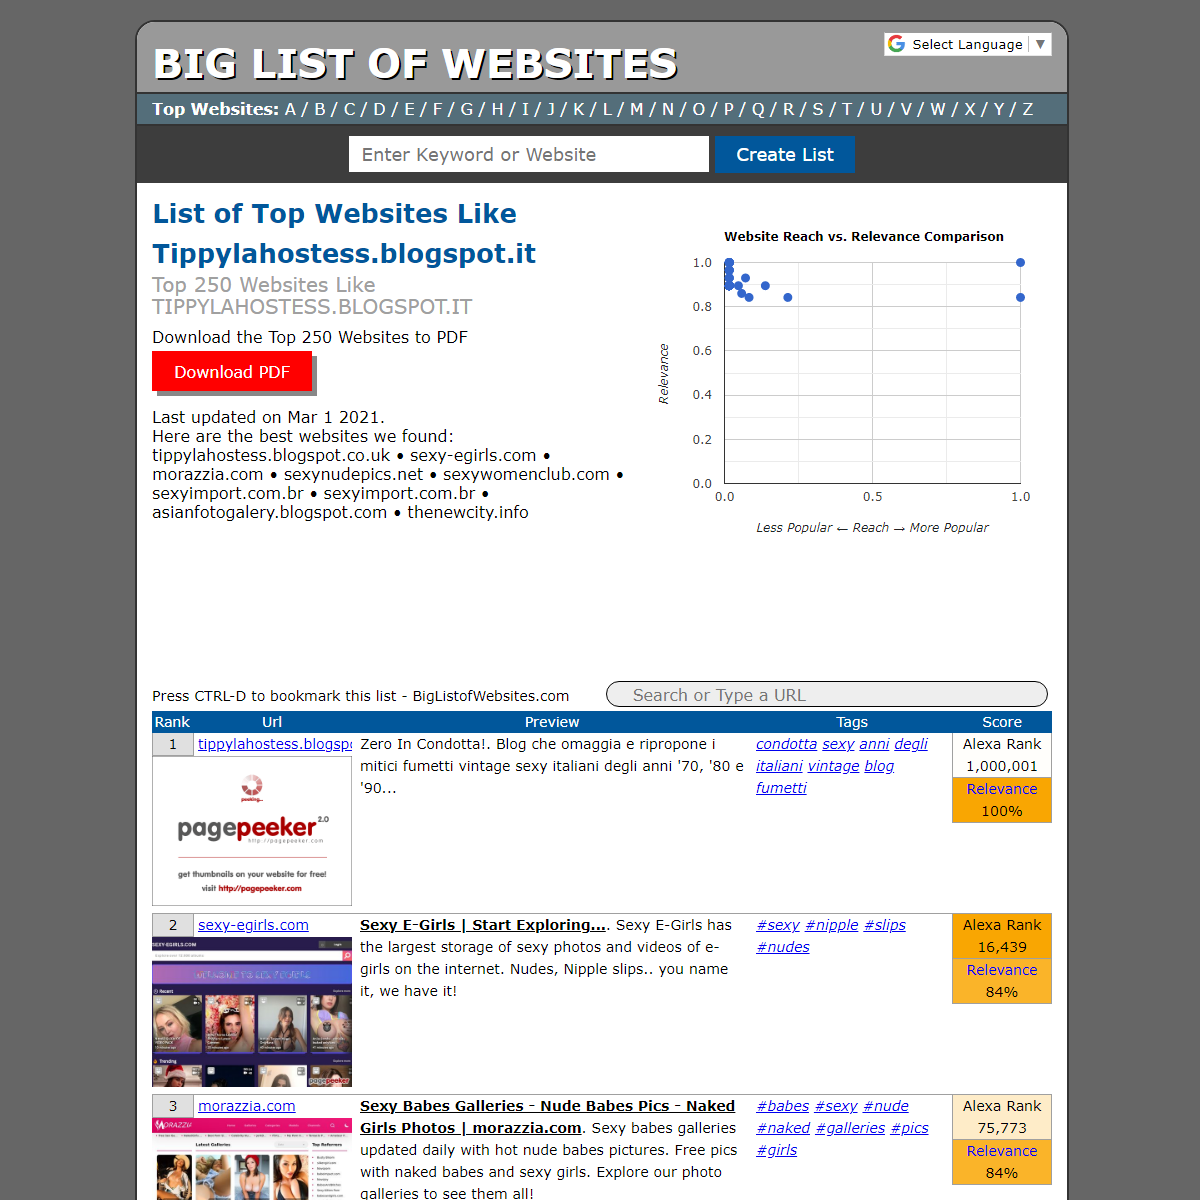 A complete backup of http://biglistofwebsites.com/list-top-websites-like-tippylahostess.blogspot.it